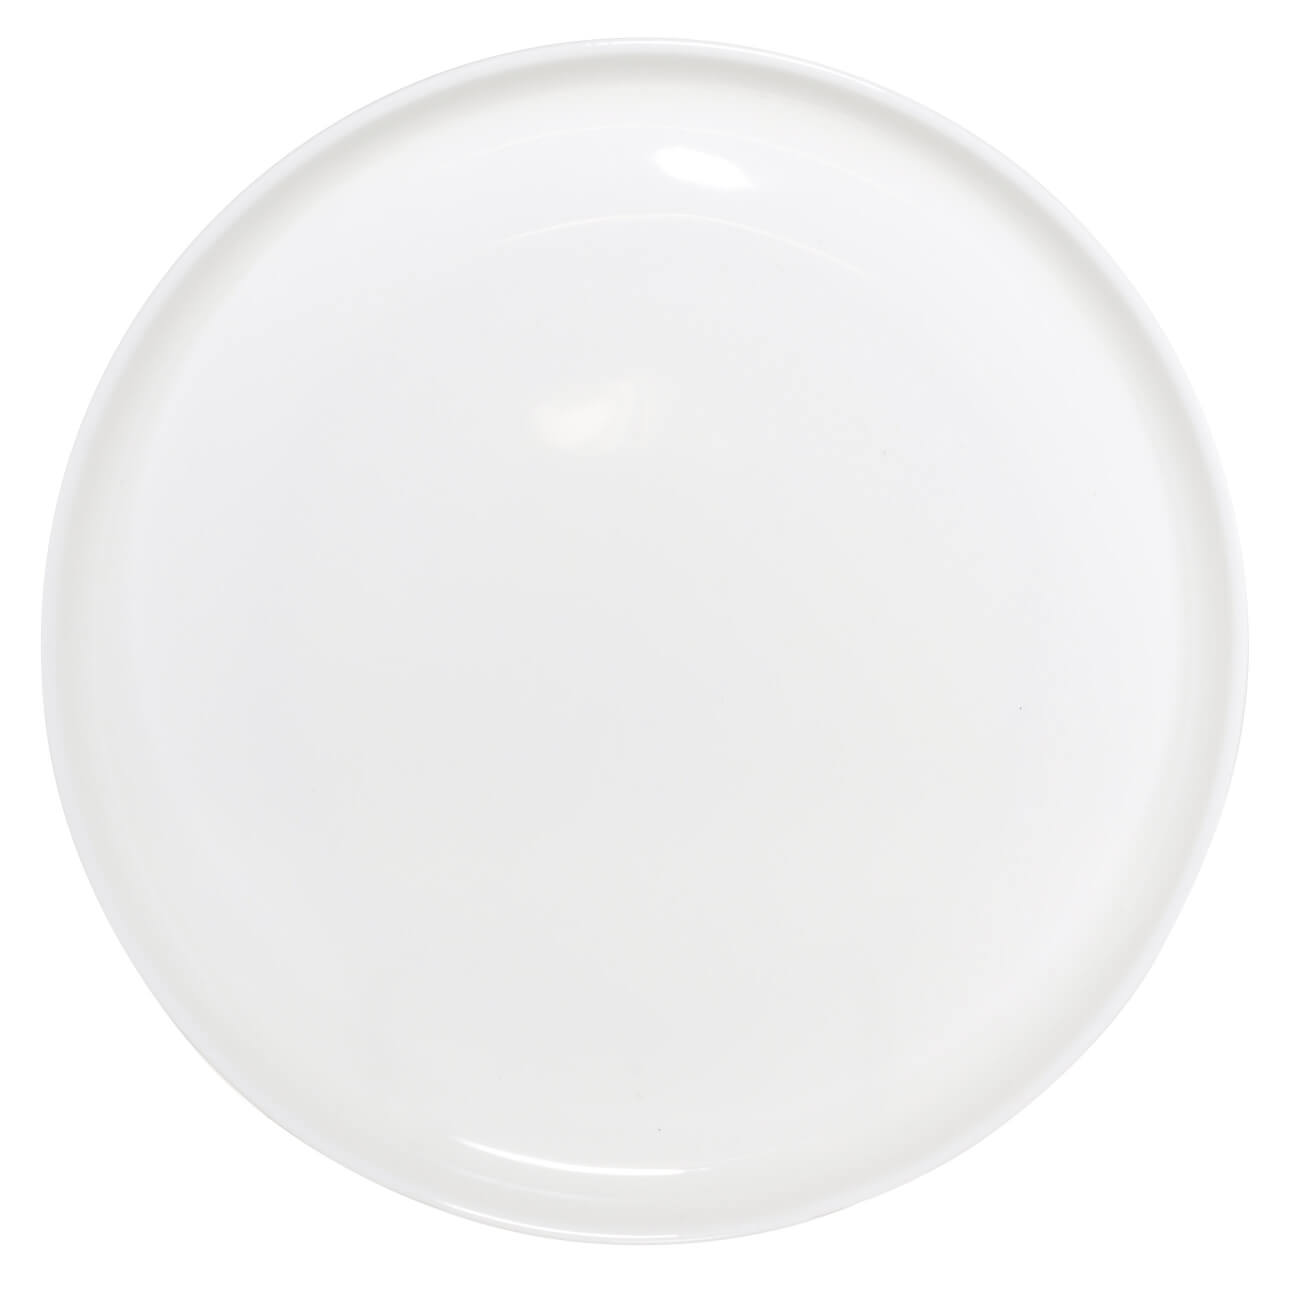 Тарелка обеденная, 26 см, фарфор F, белая, Ideal white тарелка обеденная luminarc брашмания p1402 26см green